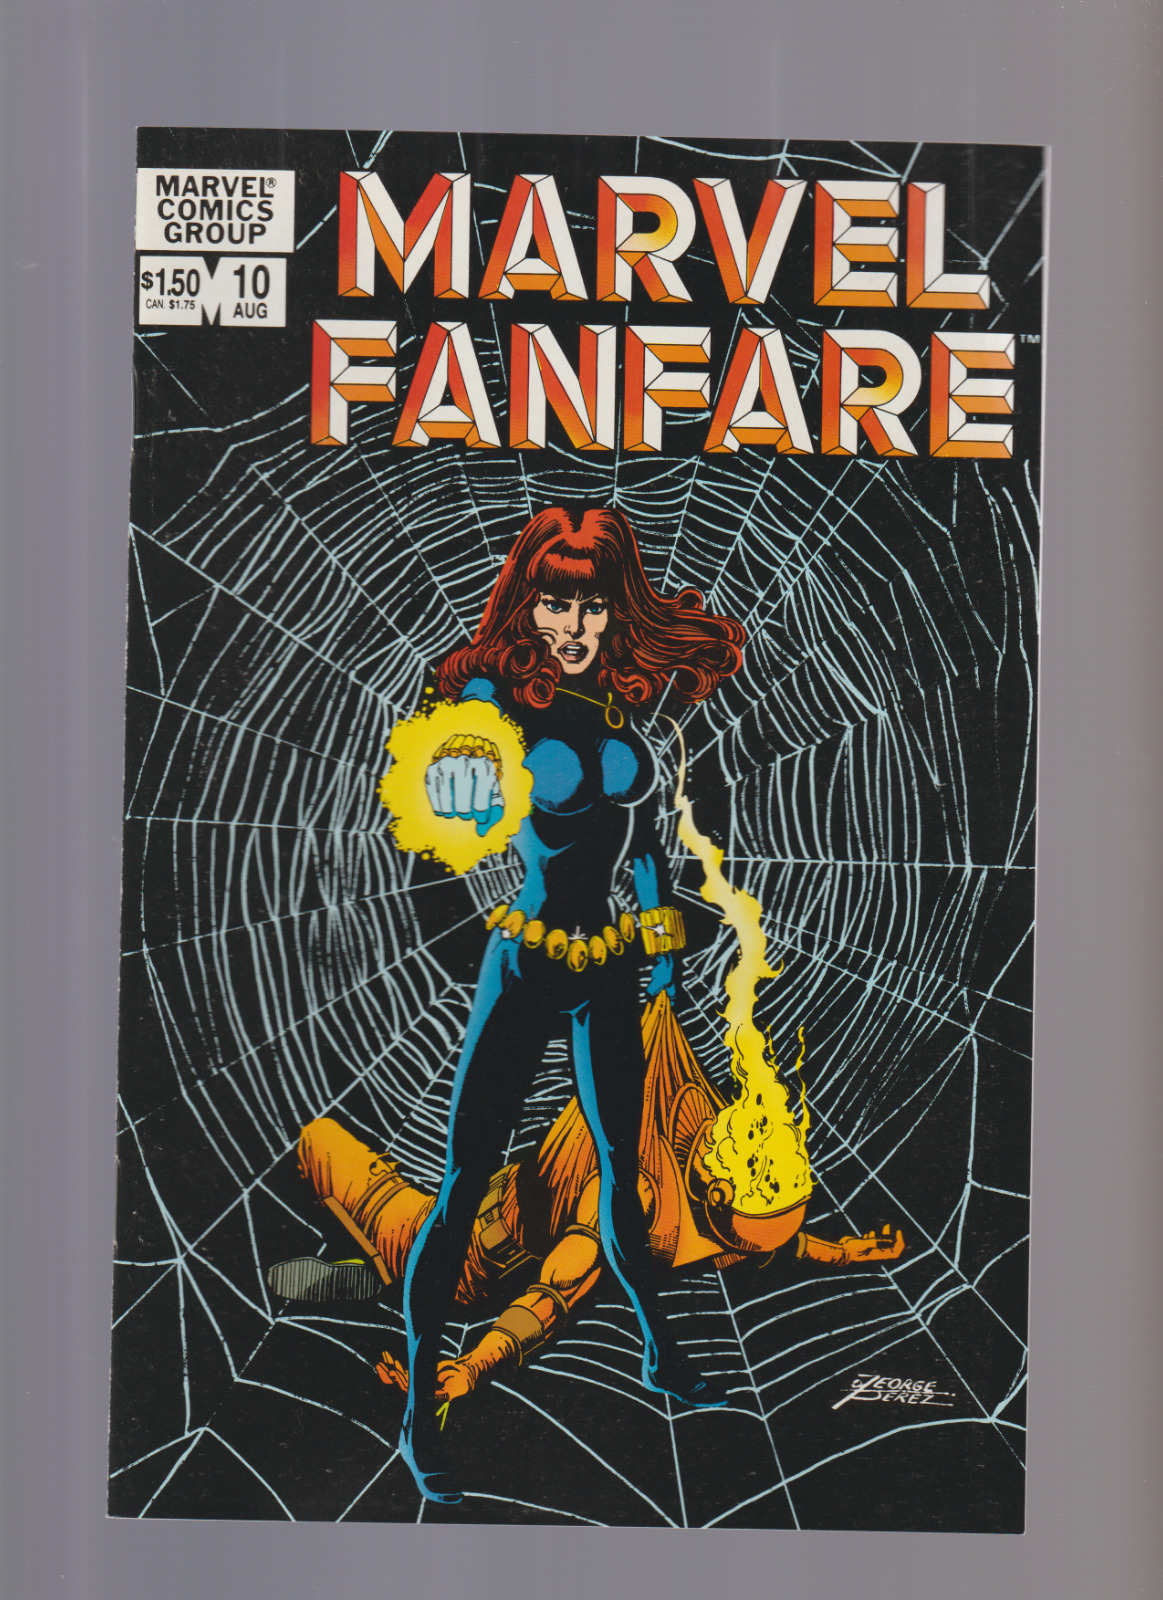 Marvel Fanfare #10 (1983) CLASSIC PEREZ COVER BLACK WIDOW IRON MAIDEN STORY ARC